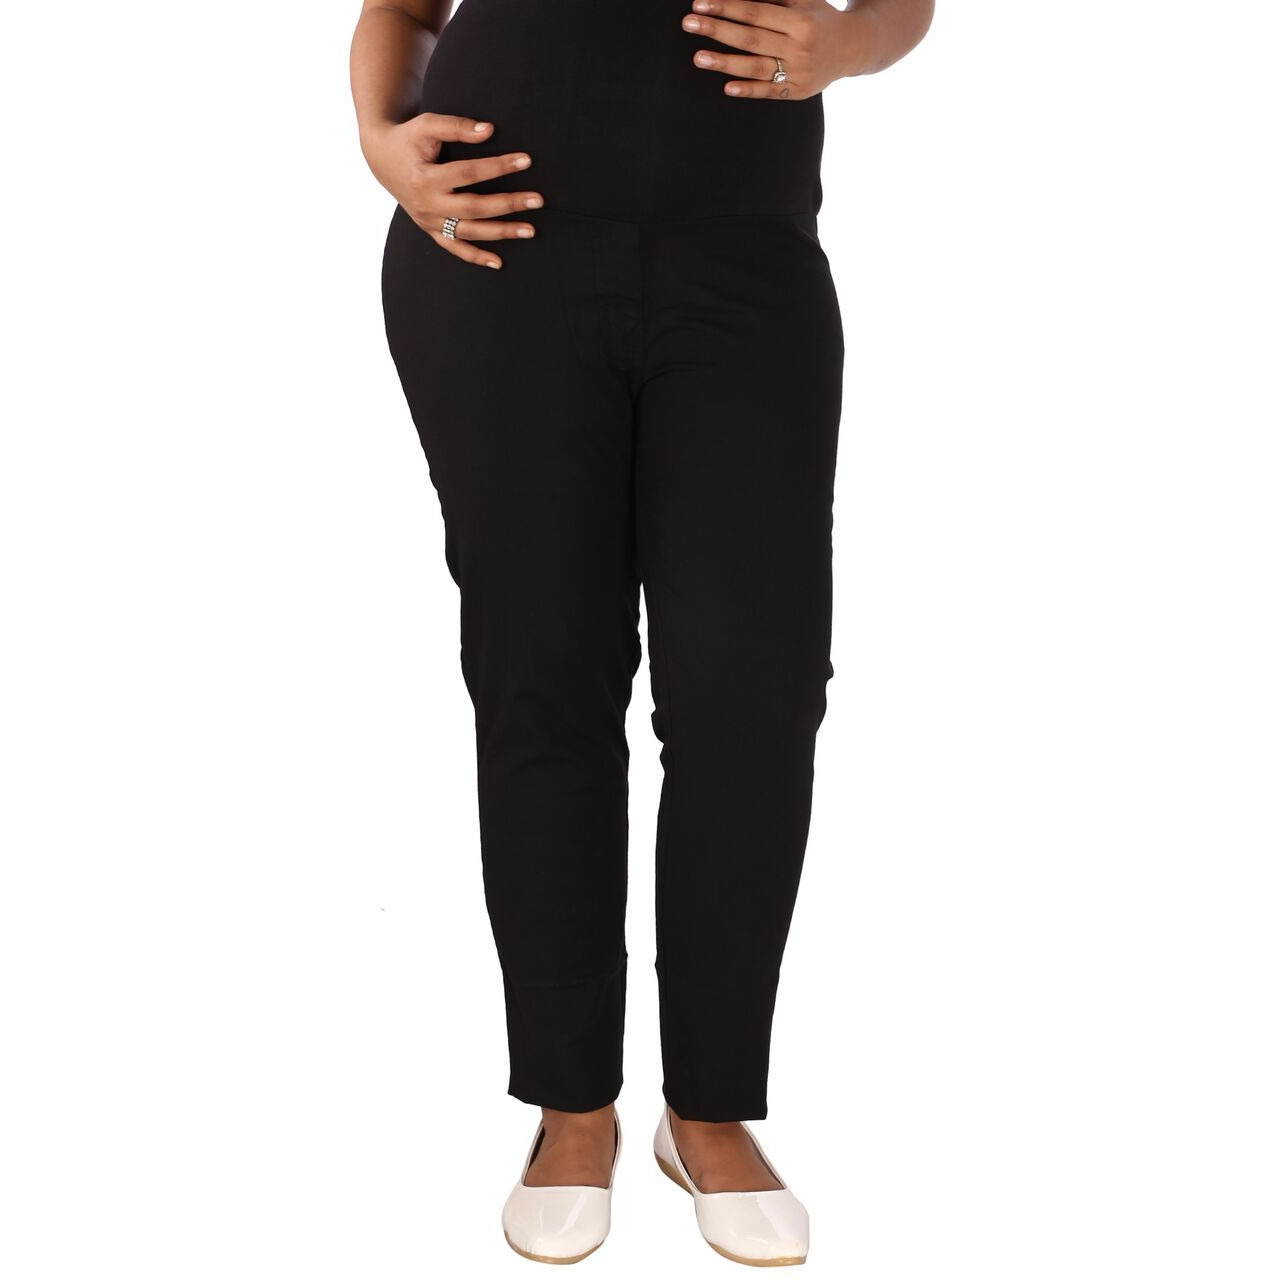 Mamma's maternity Women's Black Linen Trouser (Size:MEDIUM)